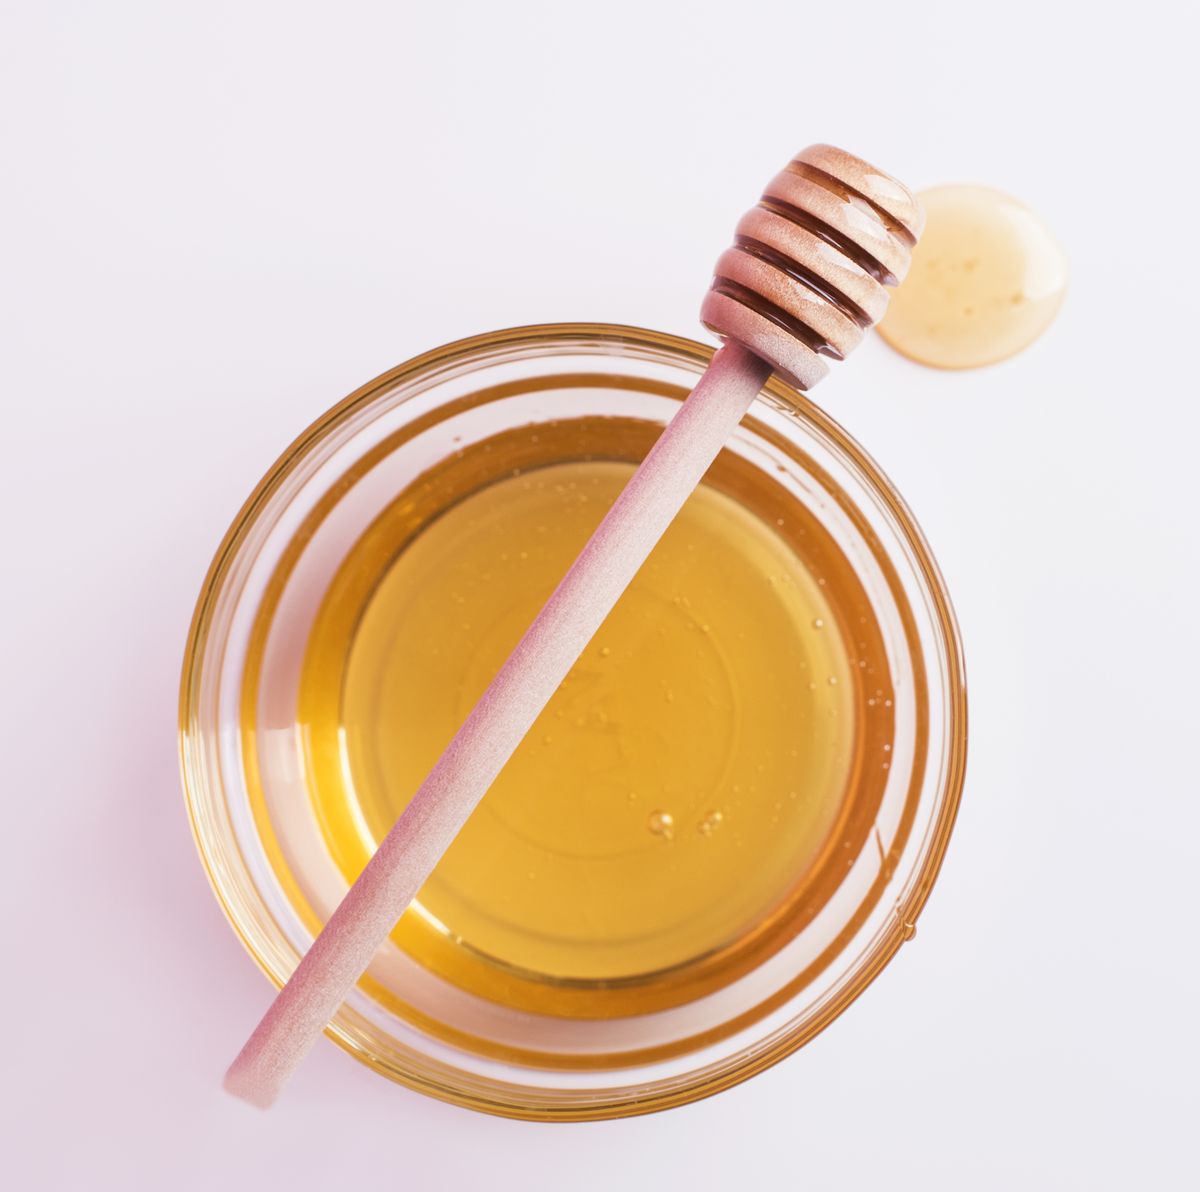 Honey spoon over glass bowl